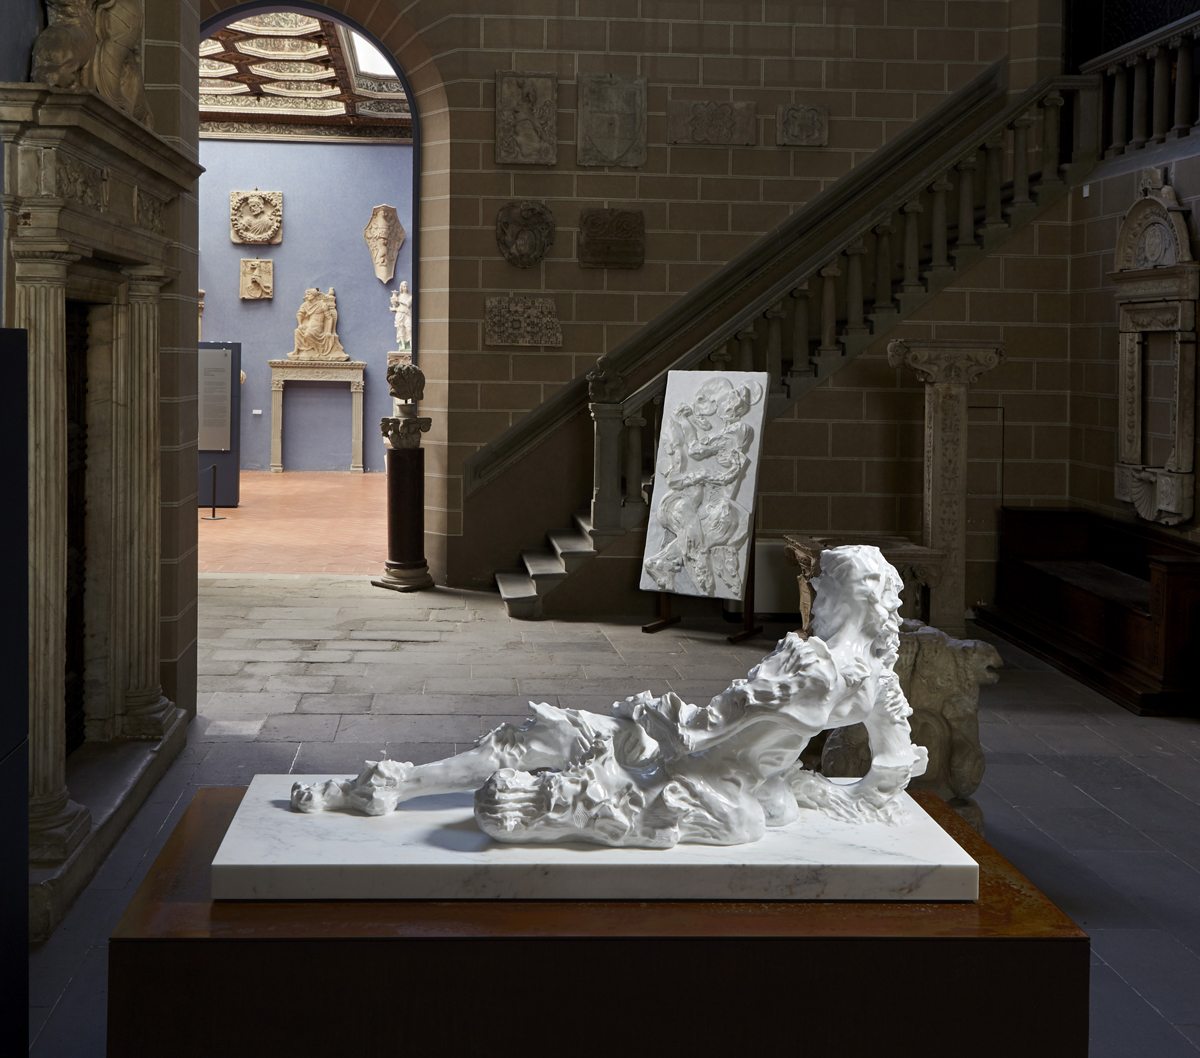 Kevin Francis Gray, “Reclining Nude II”, vue de l'exposition au musée Bardini, Florence (2020).